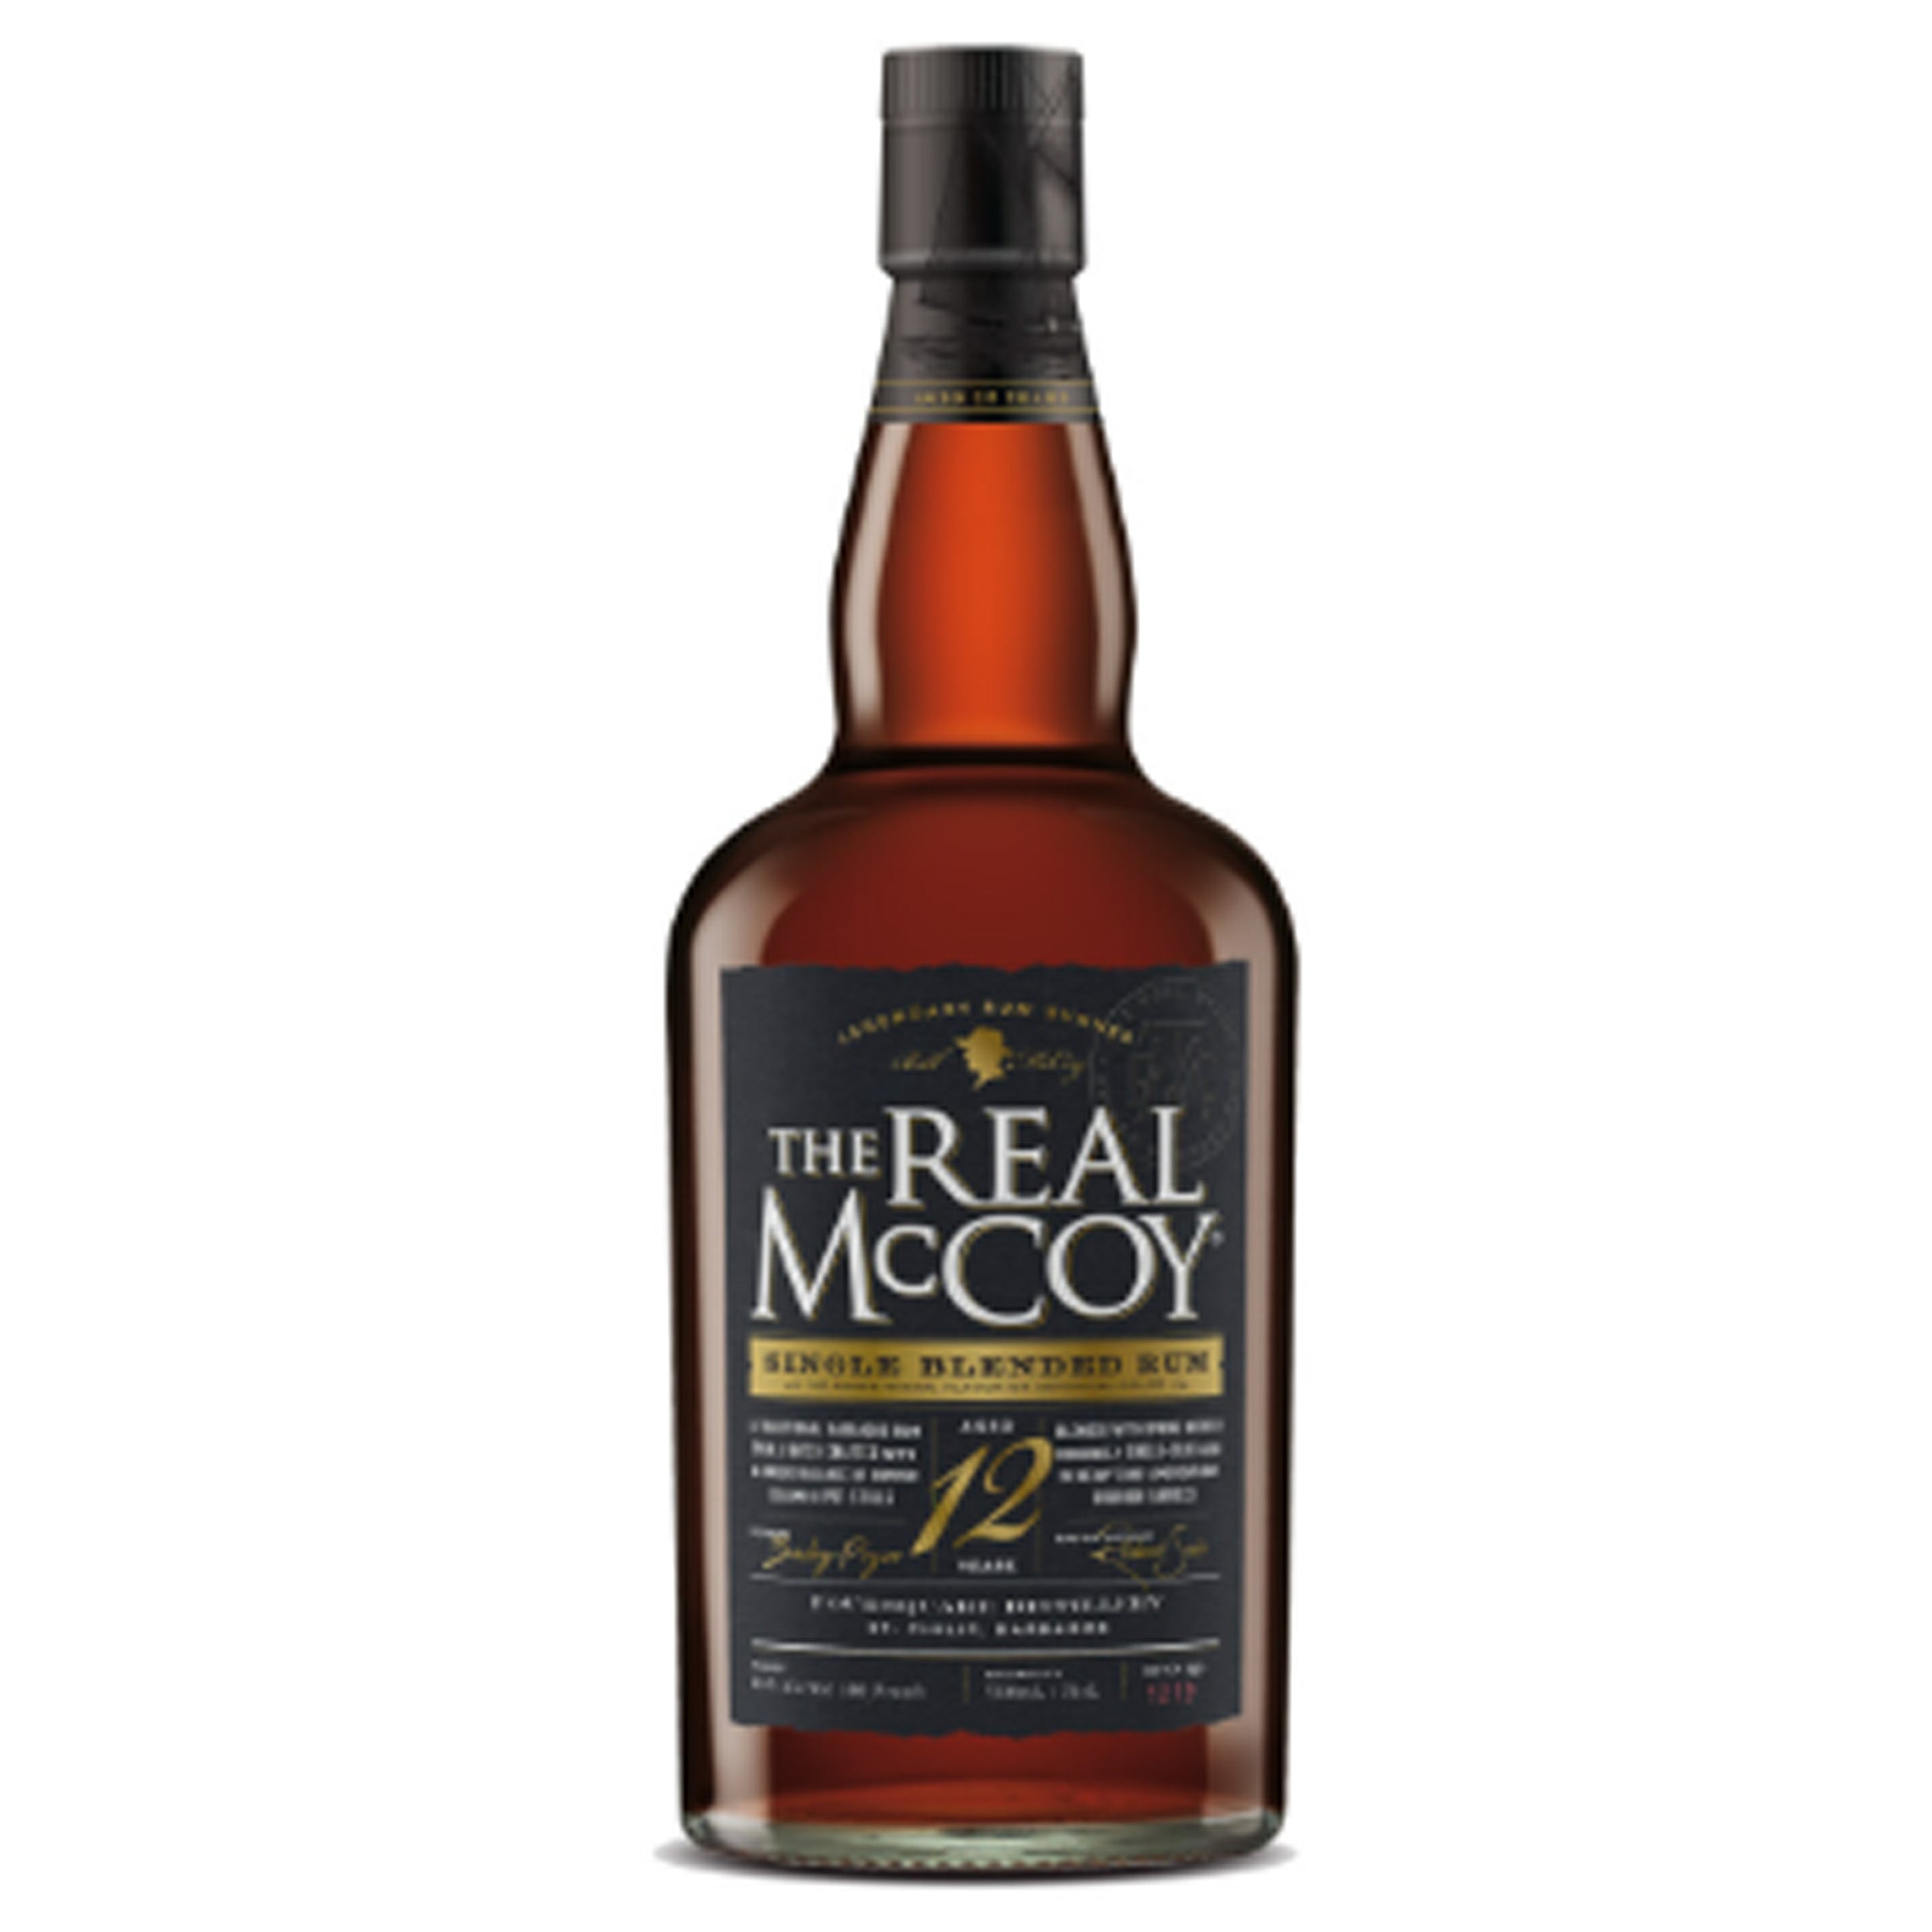 The Real Mccoy Single Blended 12yr Rum